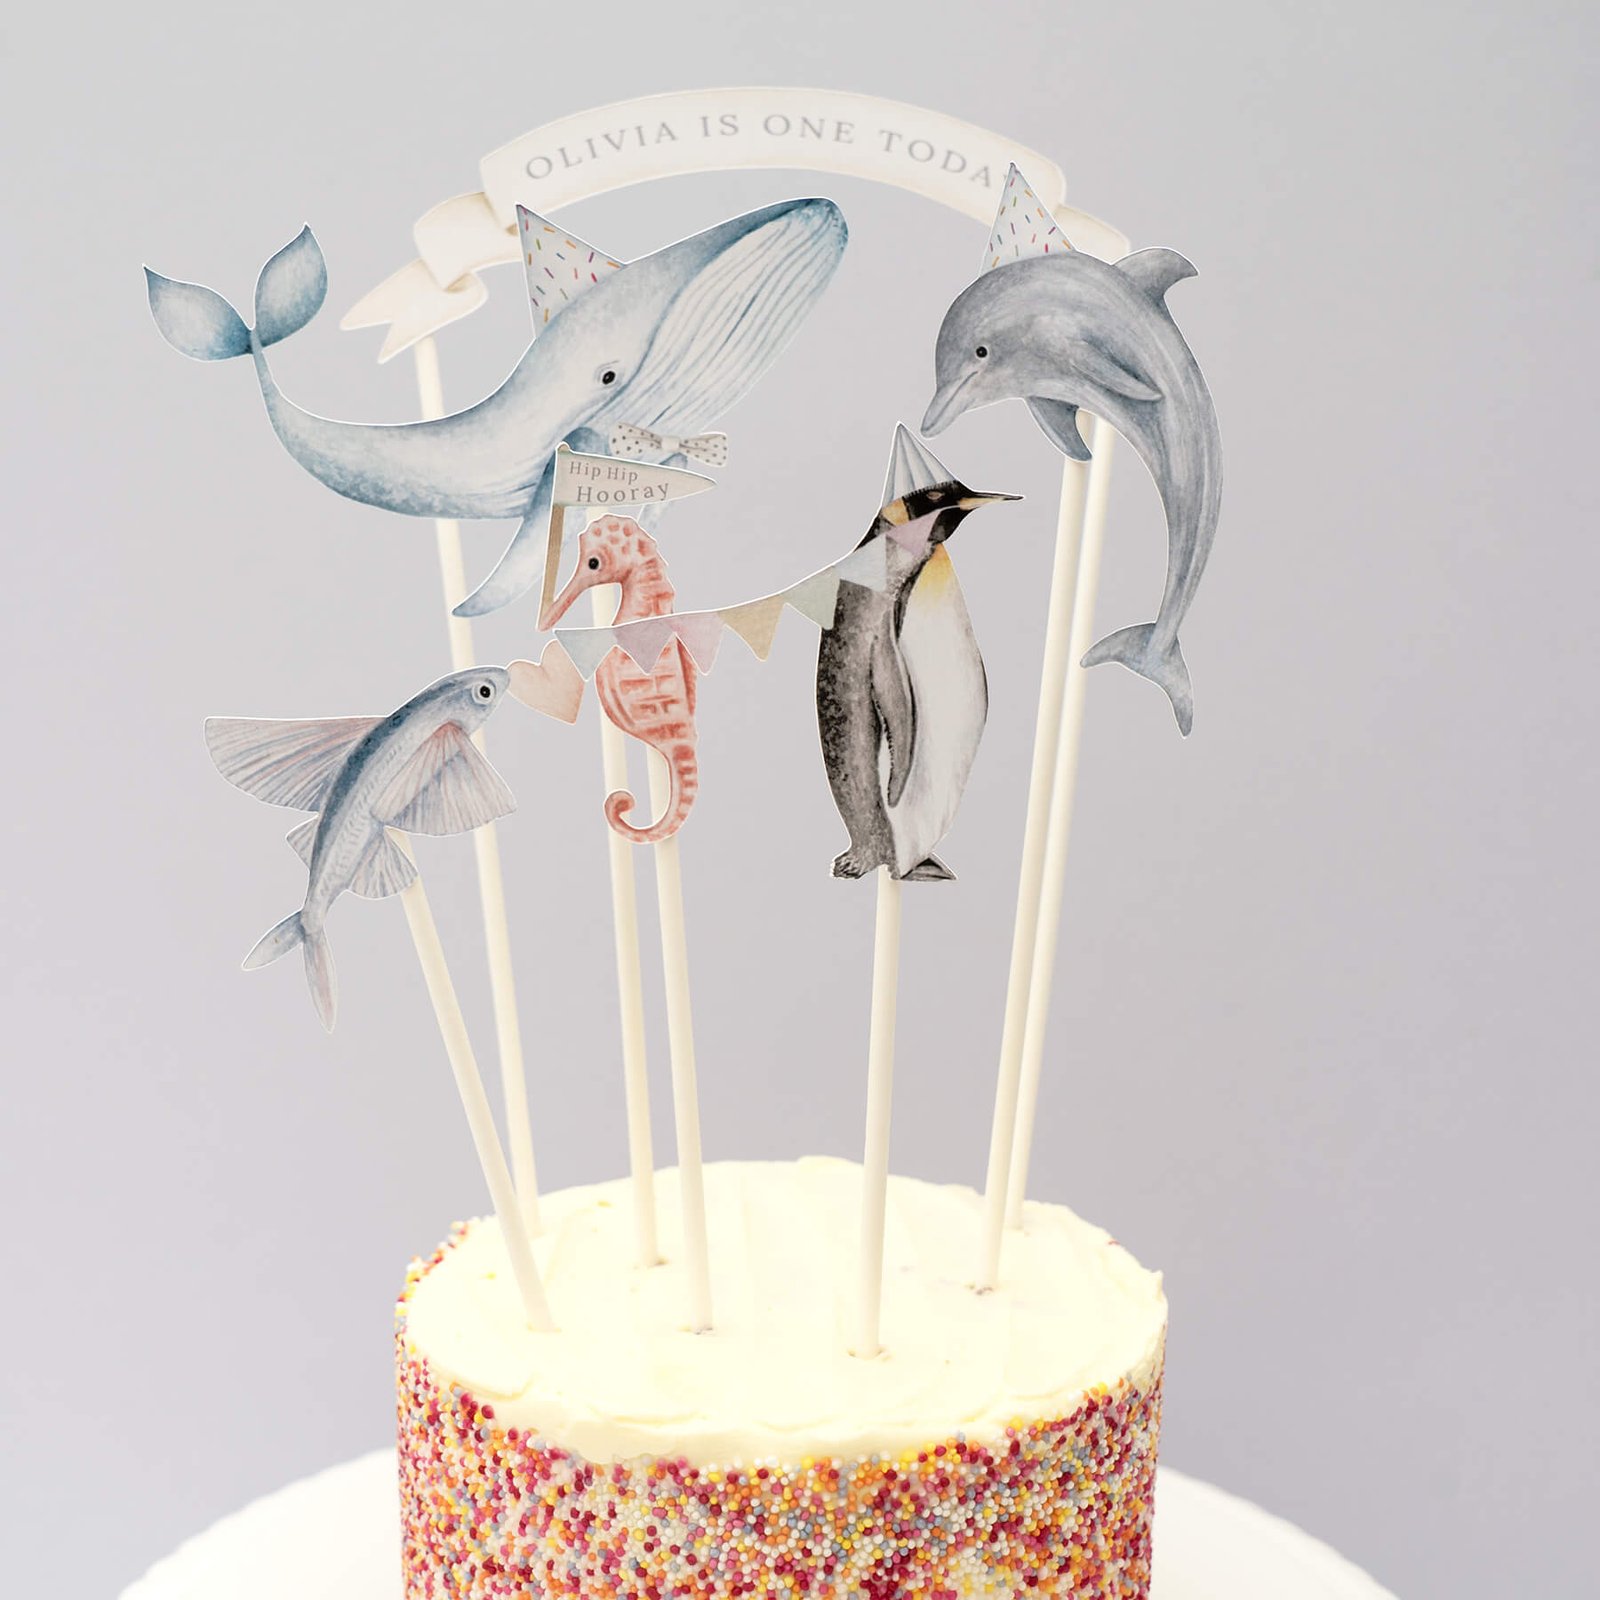 50 Dolphin Cake Design (Cake Idea) - March 2020 | Dolphin birthday cakes, Dolphin  cakes, Cool cake designs